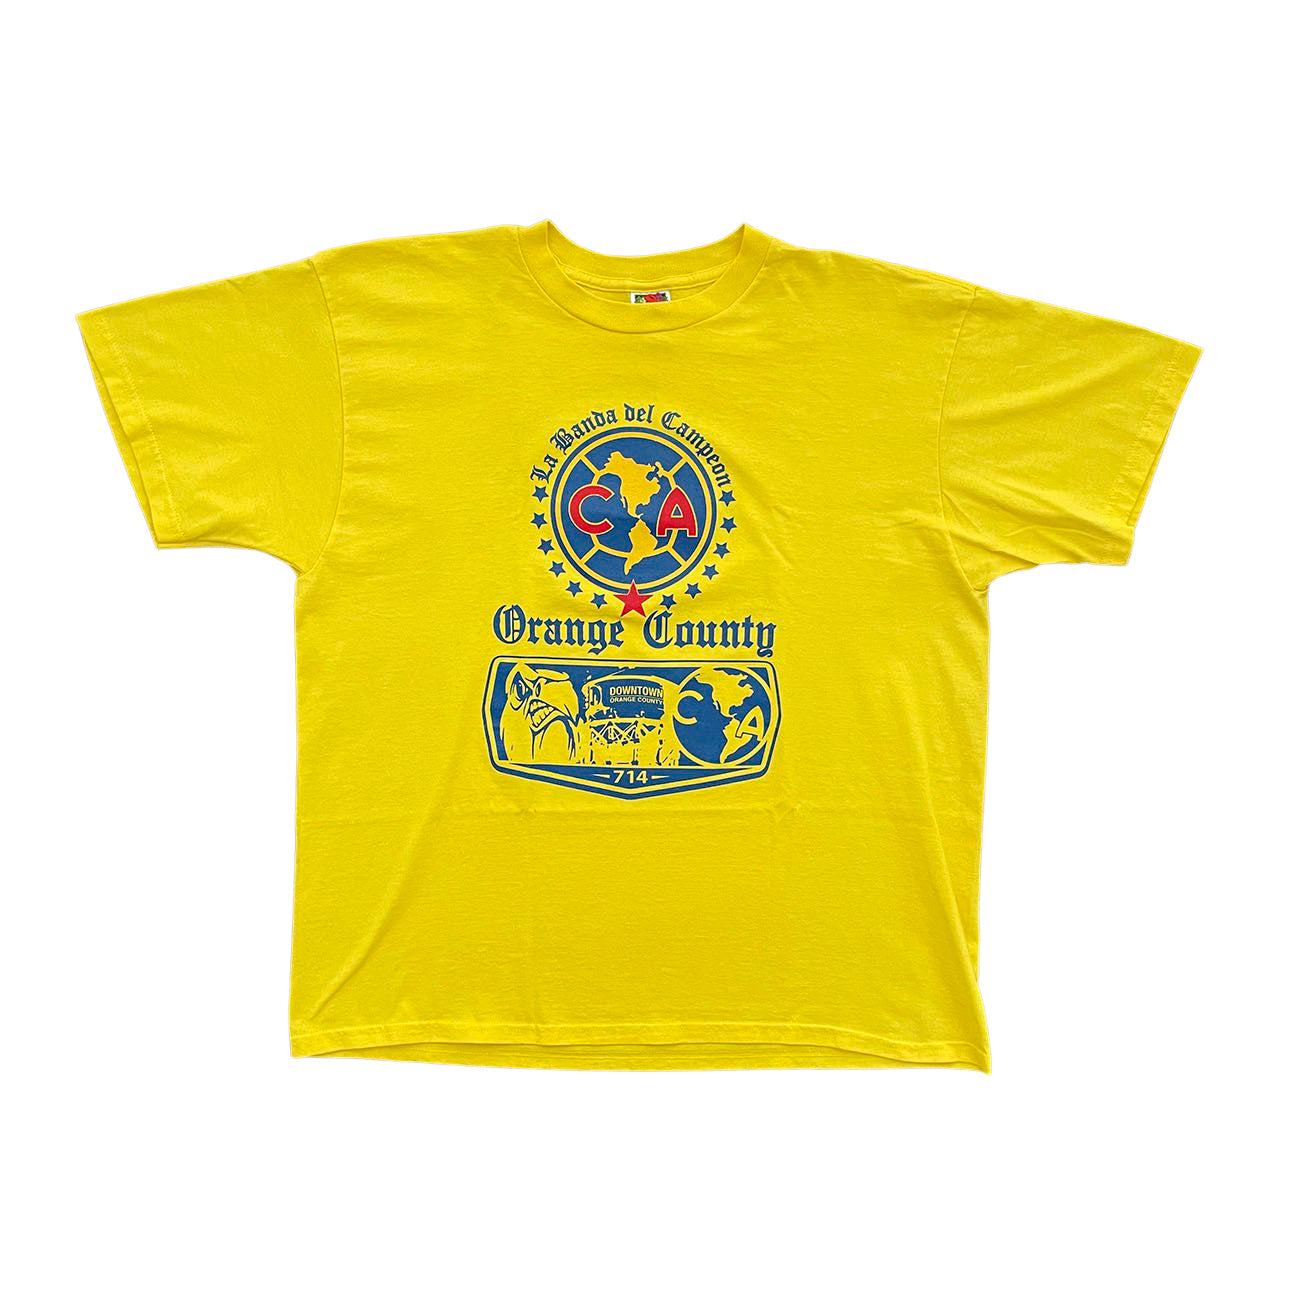 Club America Orange County T-Shirt - L